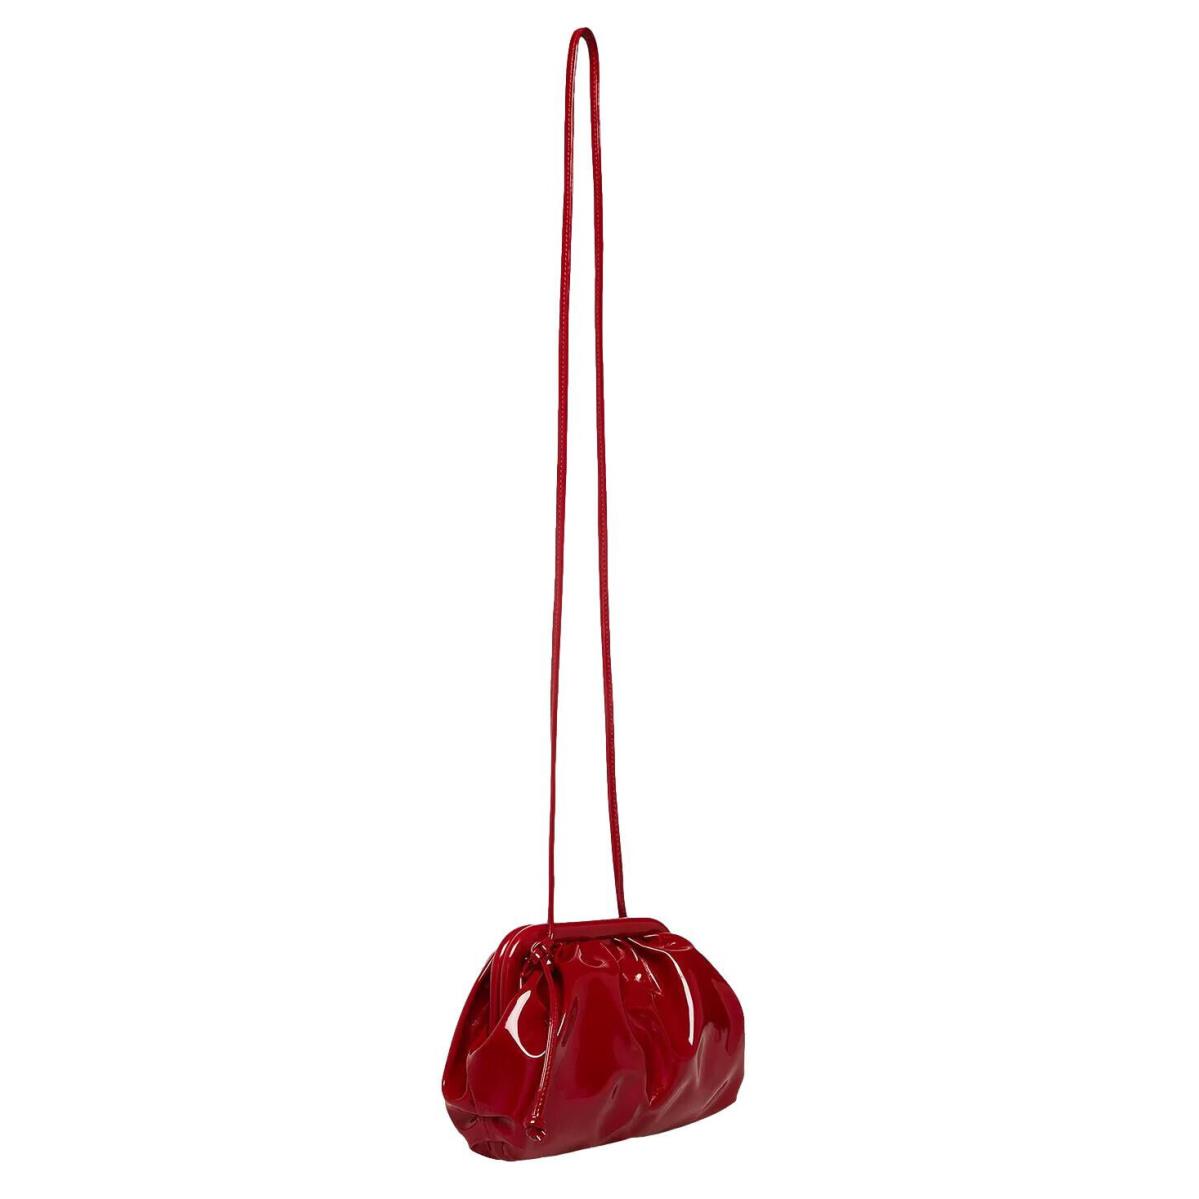 Steve Madden Bnikki-p Luscious Red Patent Leather Clutch Shoulder Handbag